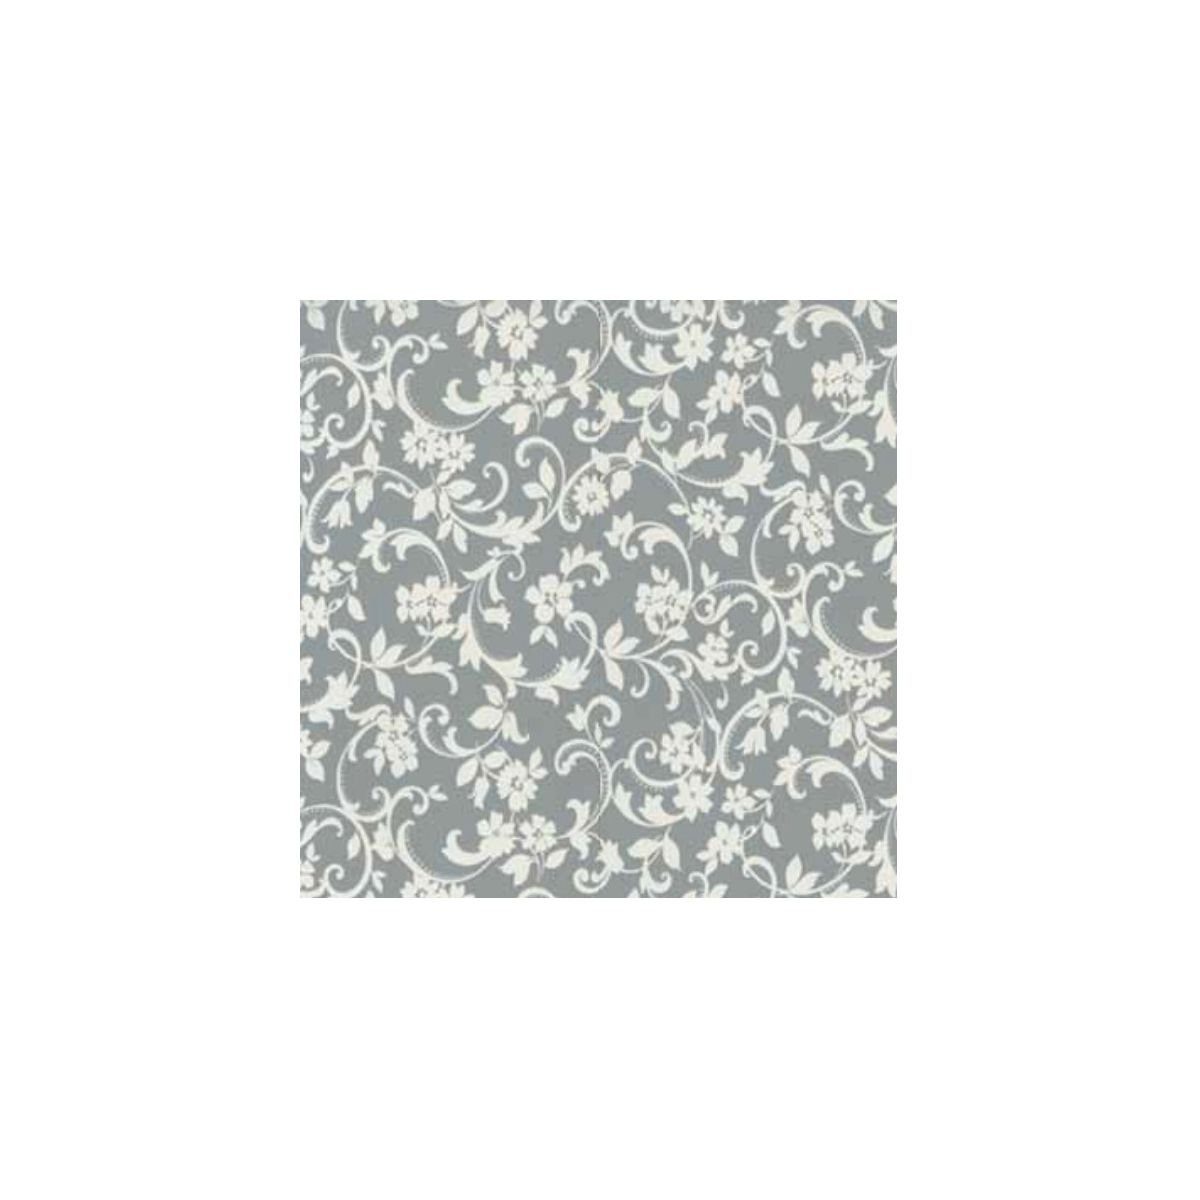 AS4HOME Möbelfolie Möbelfolie Ranken grau weiss - 67 cm x 200 cm, Muster: Blumenmuster